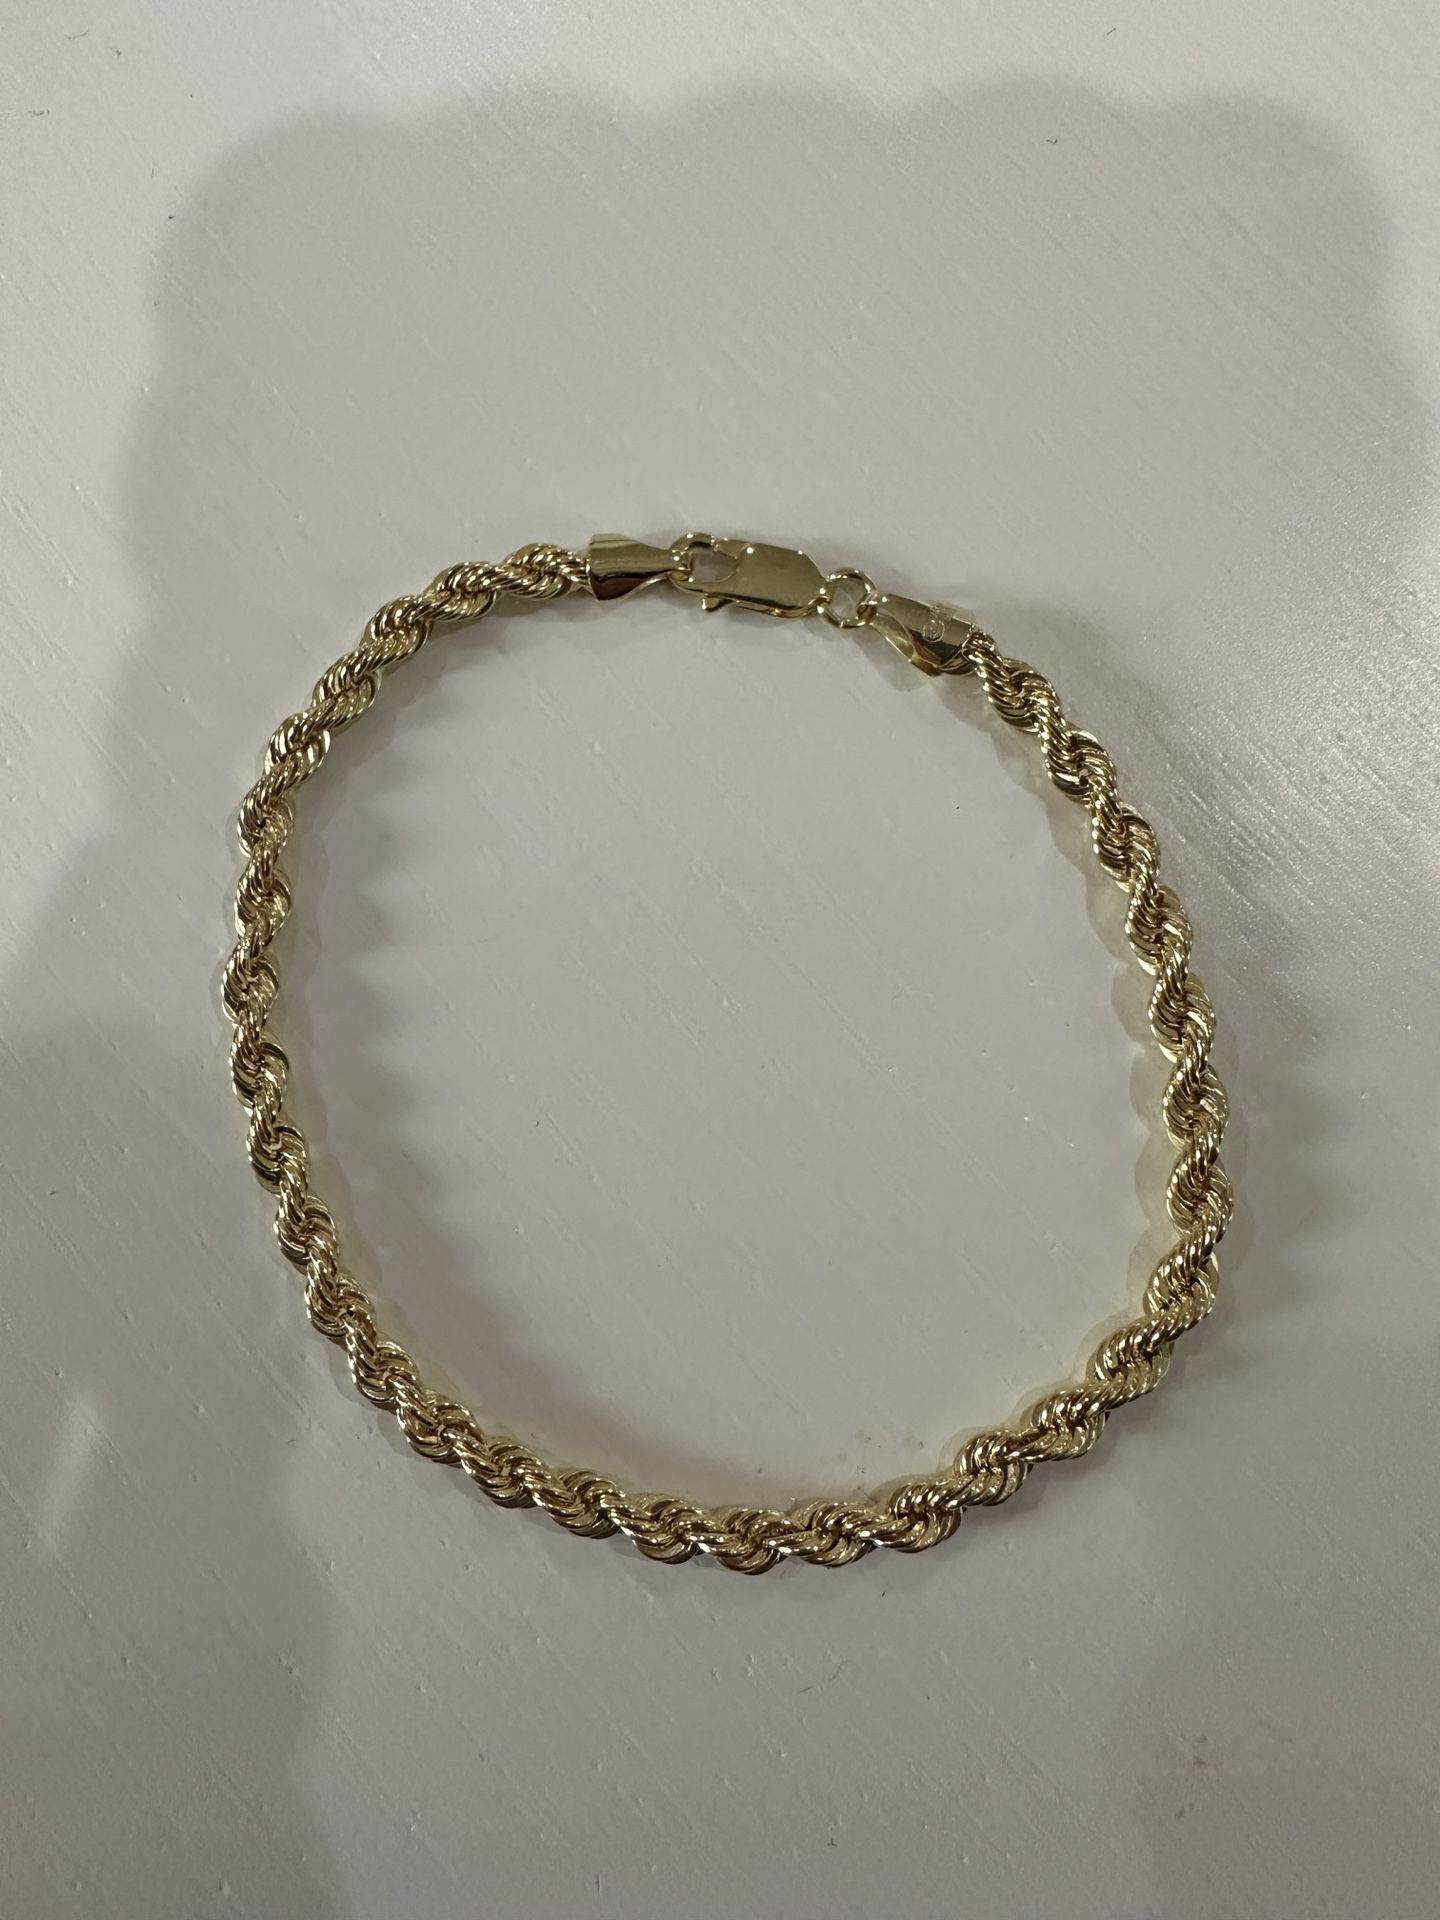 10kt Yellow Gold Rope Bracelet  7 3/4 